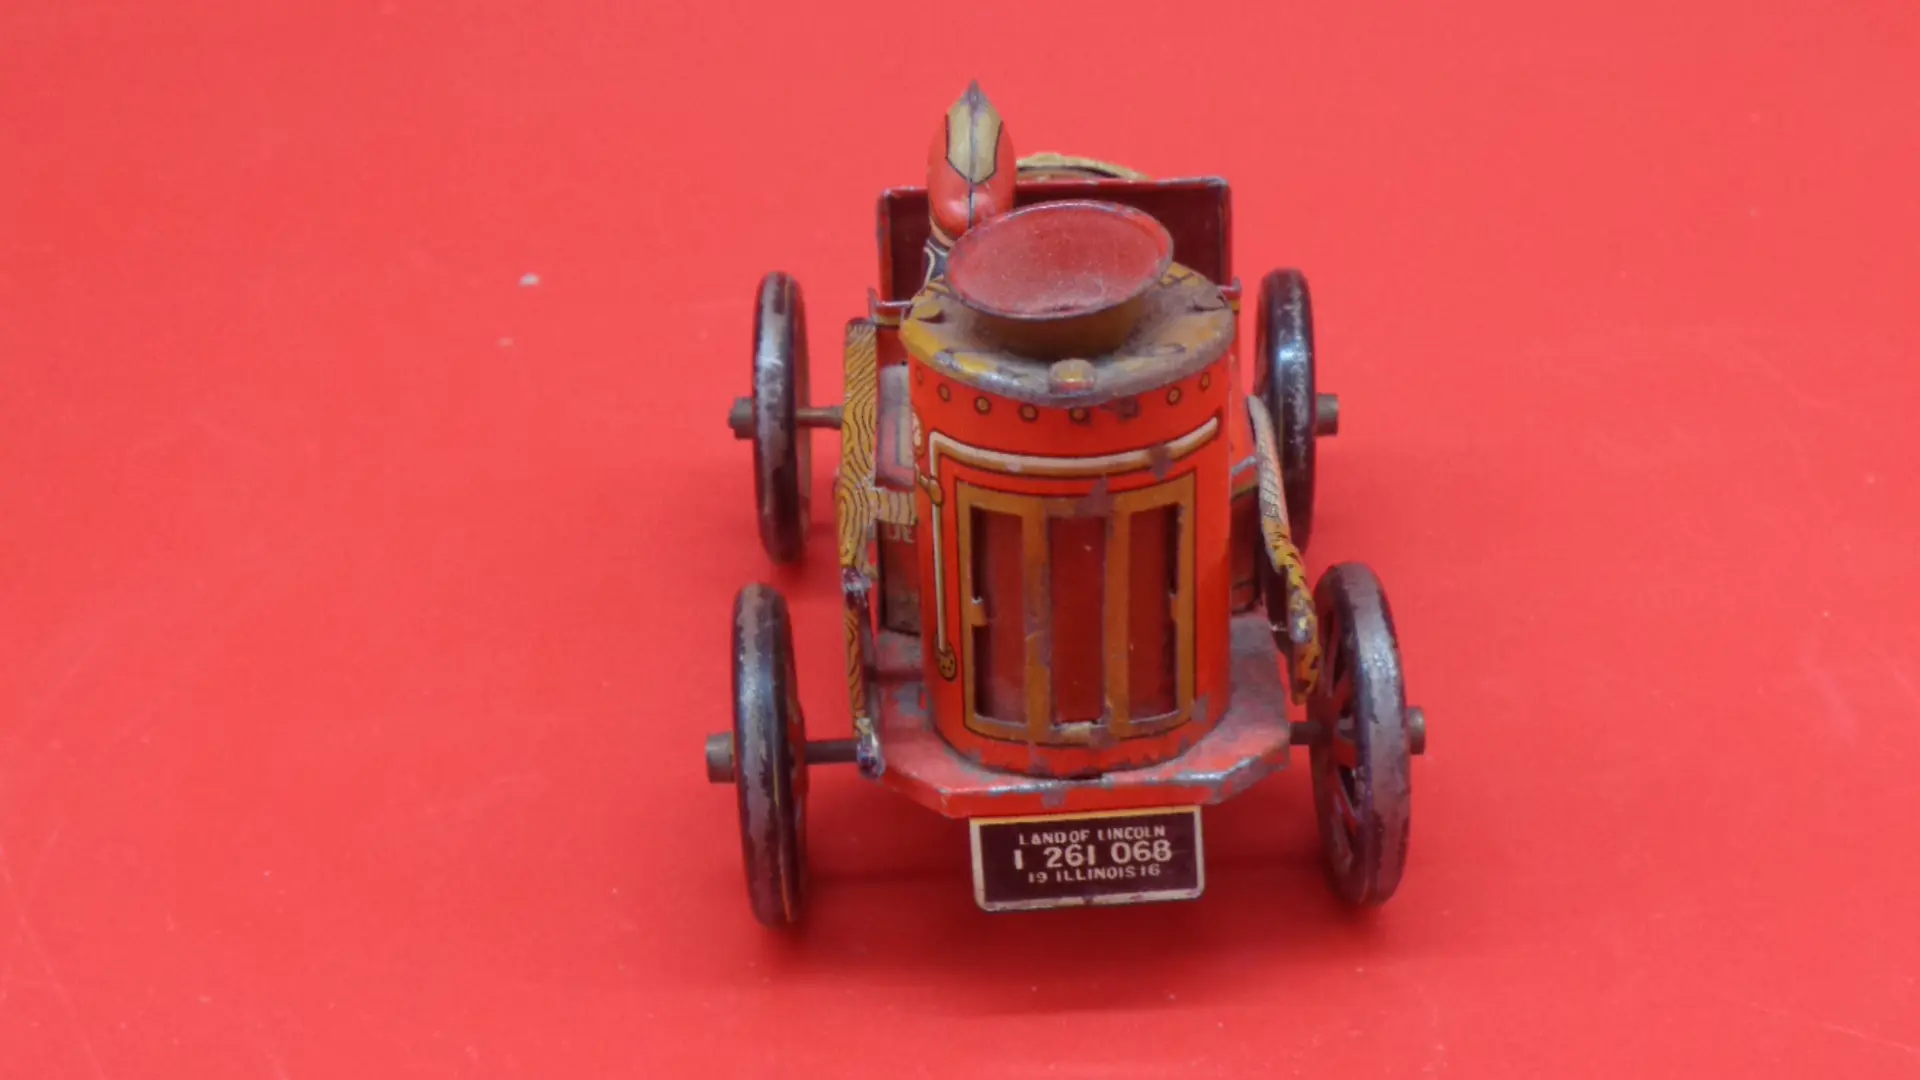 Vintage firetruck toy